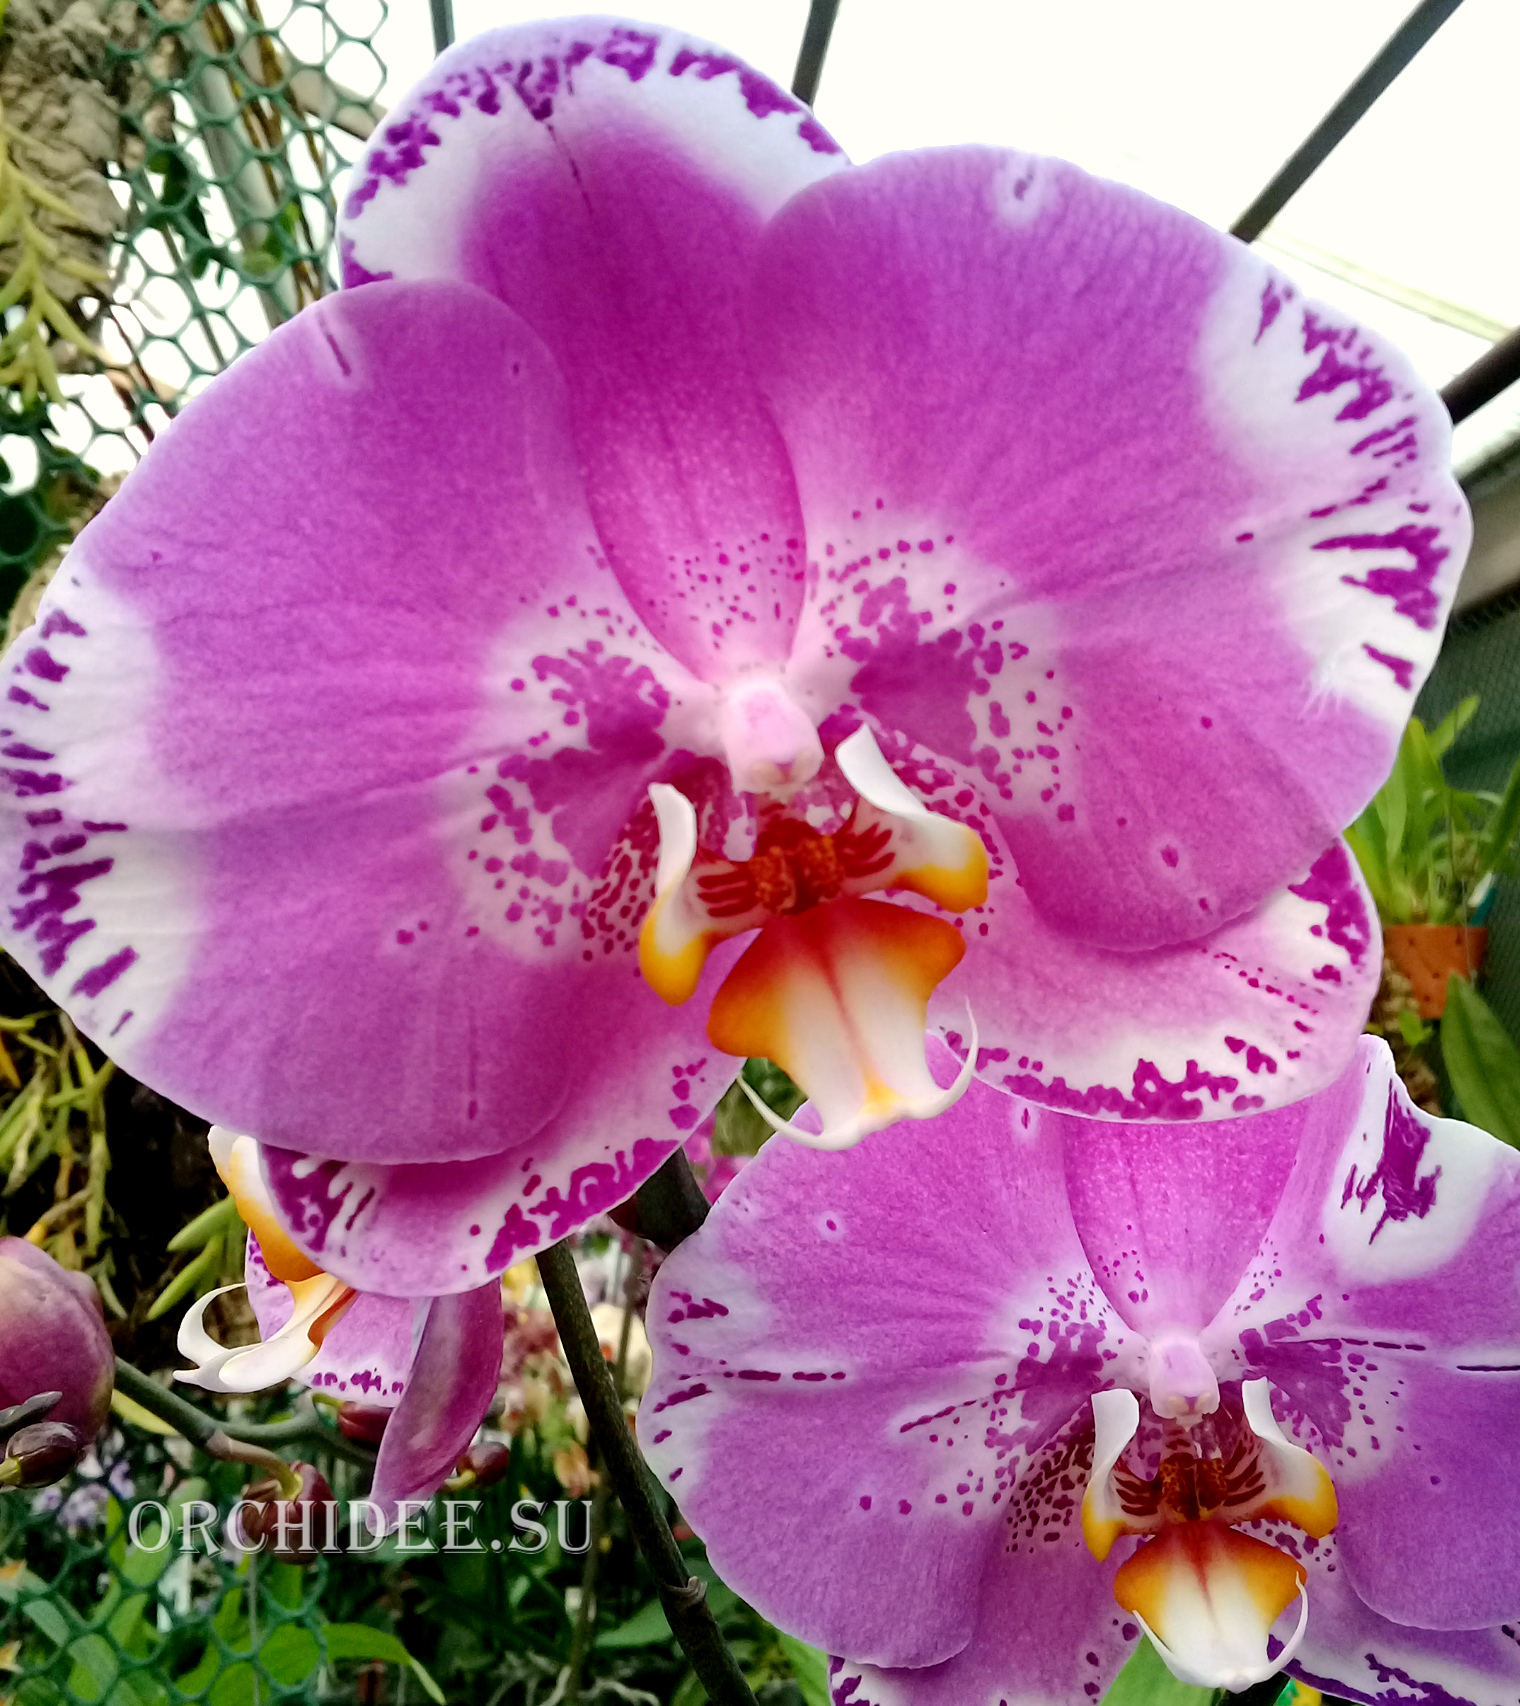 Phalaenopsis PH 269 Ox King x Fuller's Purple Queen AM/AOS